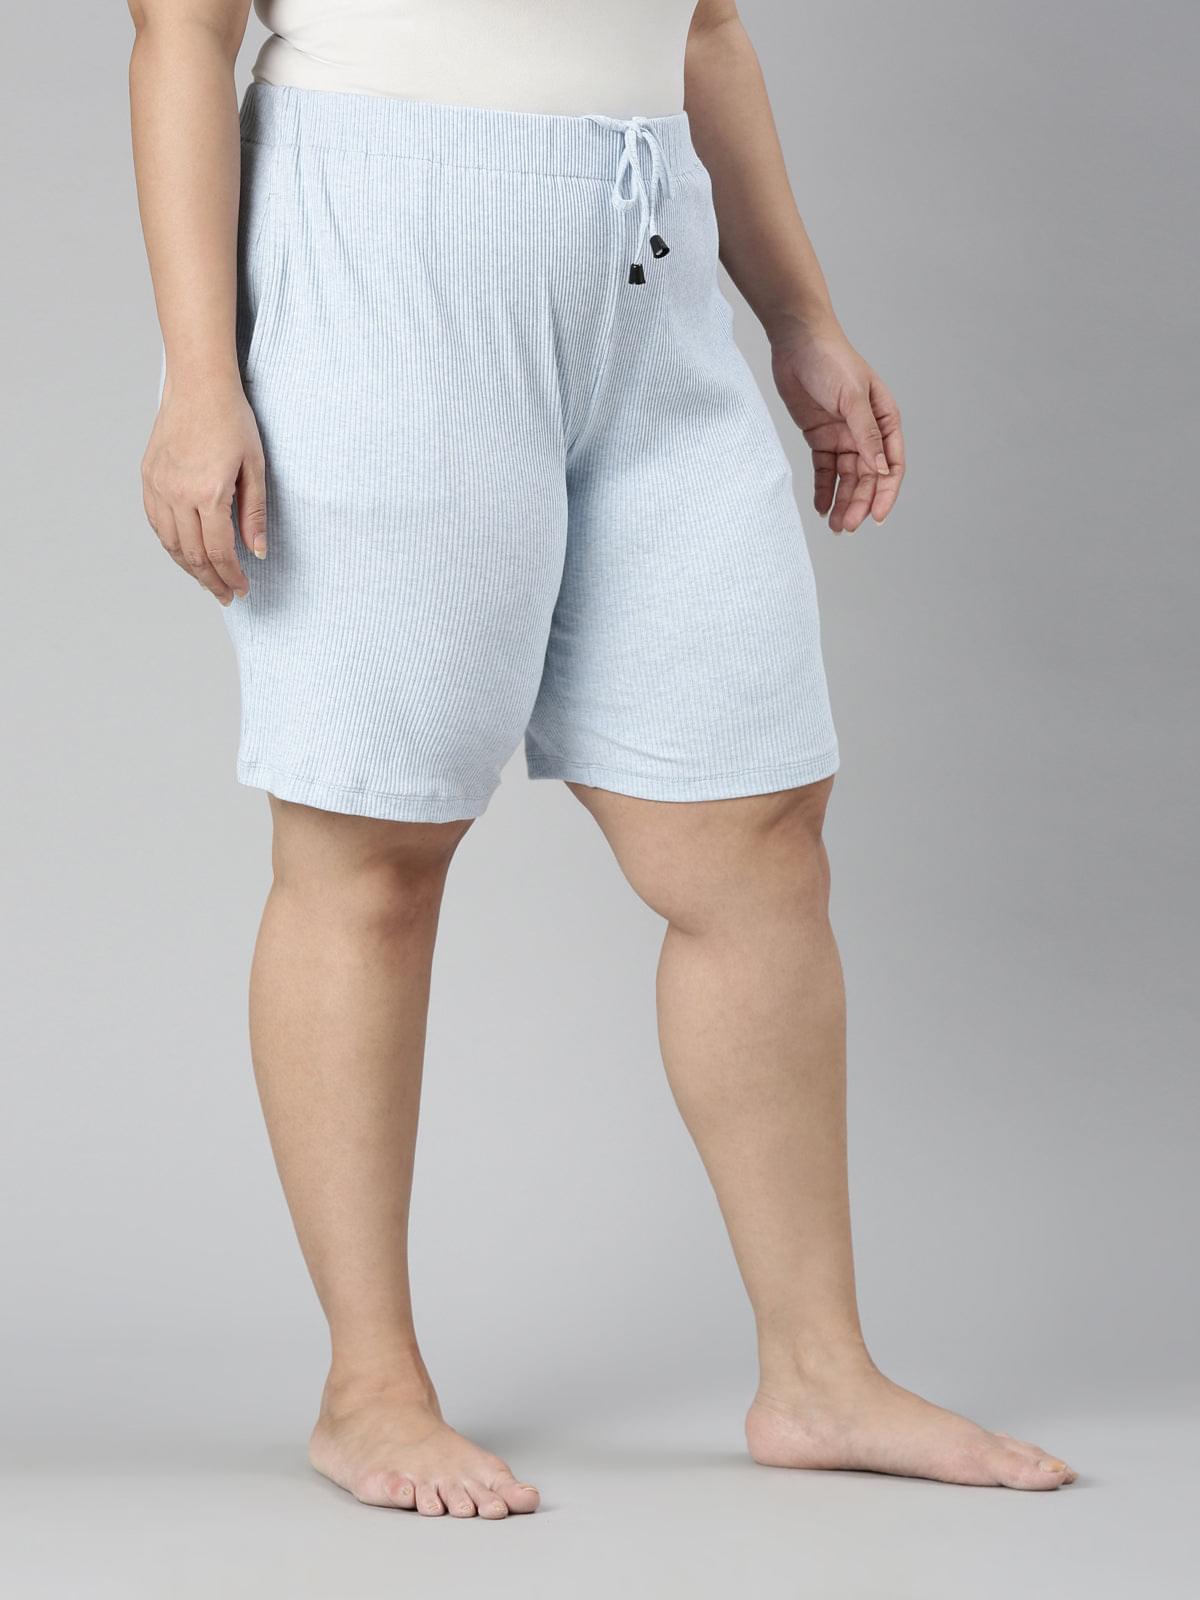 TheShaili - Women's Blue ribbed Top and shorts lounge wear set